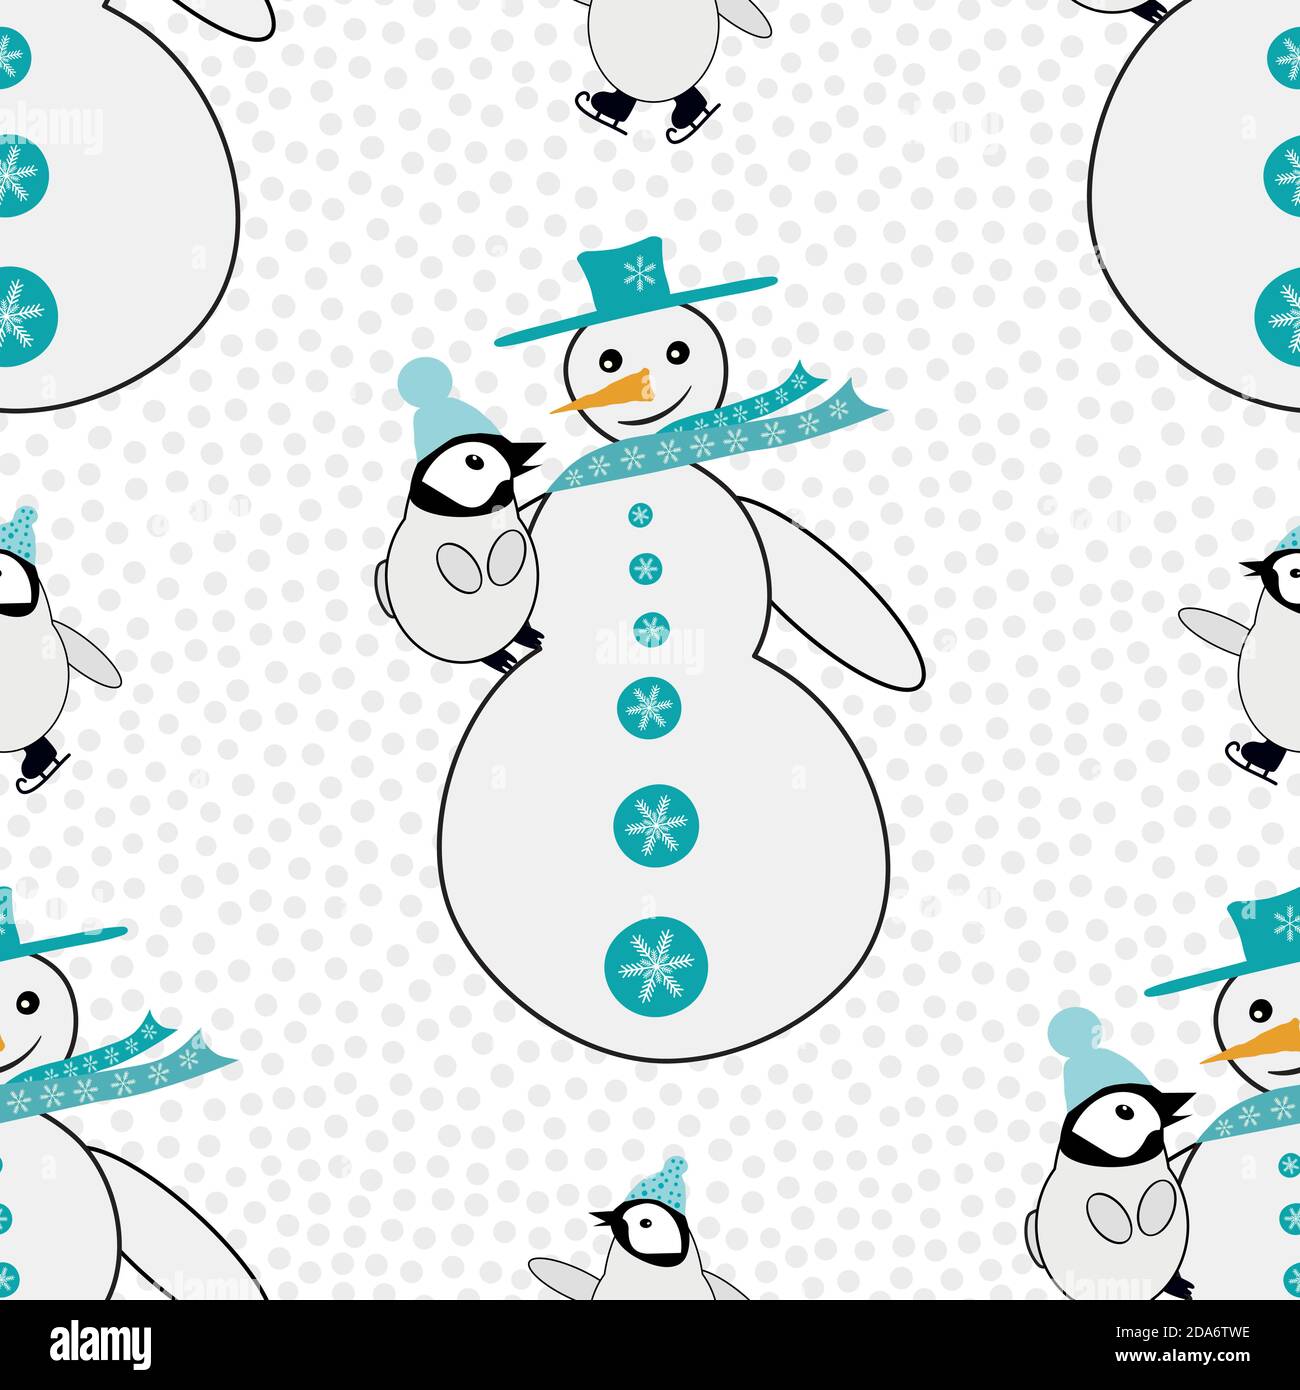 https://c8.alamy.com/comp/2DA6TWE/snowman-cuddles-baby-penguin-plus-skating-emperor-chick-seamless-vector-pattern-background-blue-white-winter-scene-backdrop-with-snowball-texture-2DA6TWE.jpg